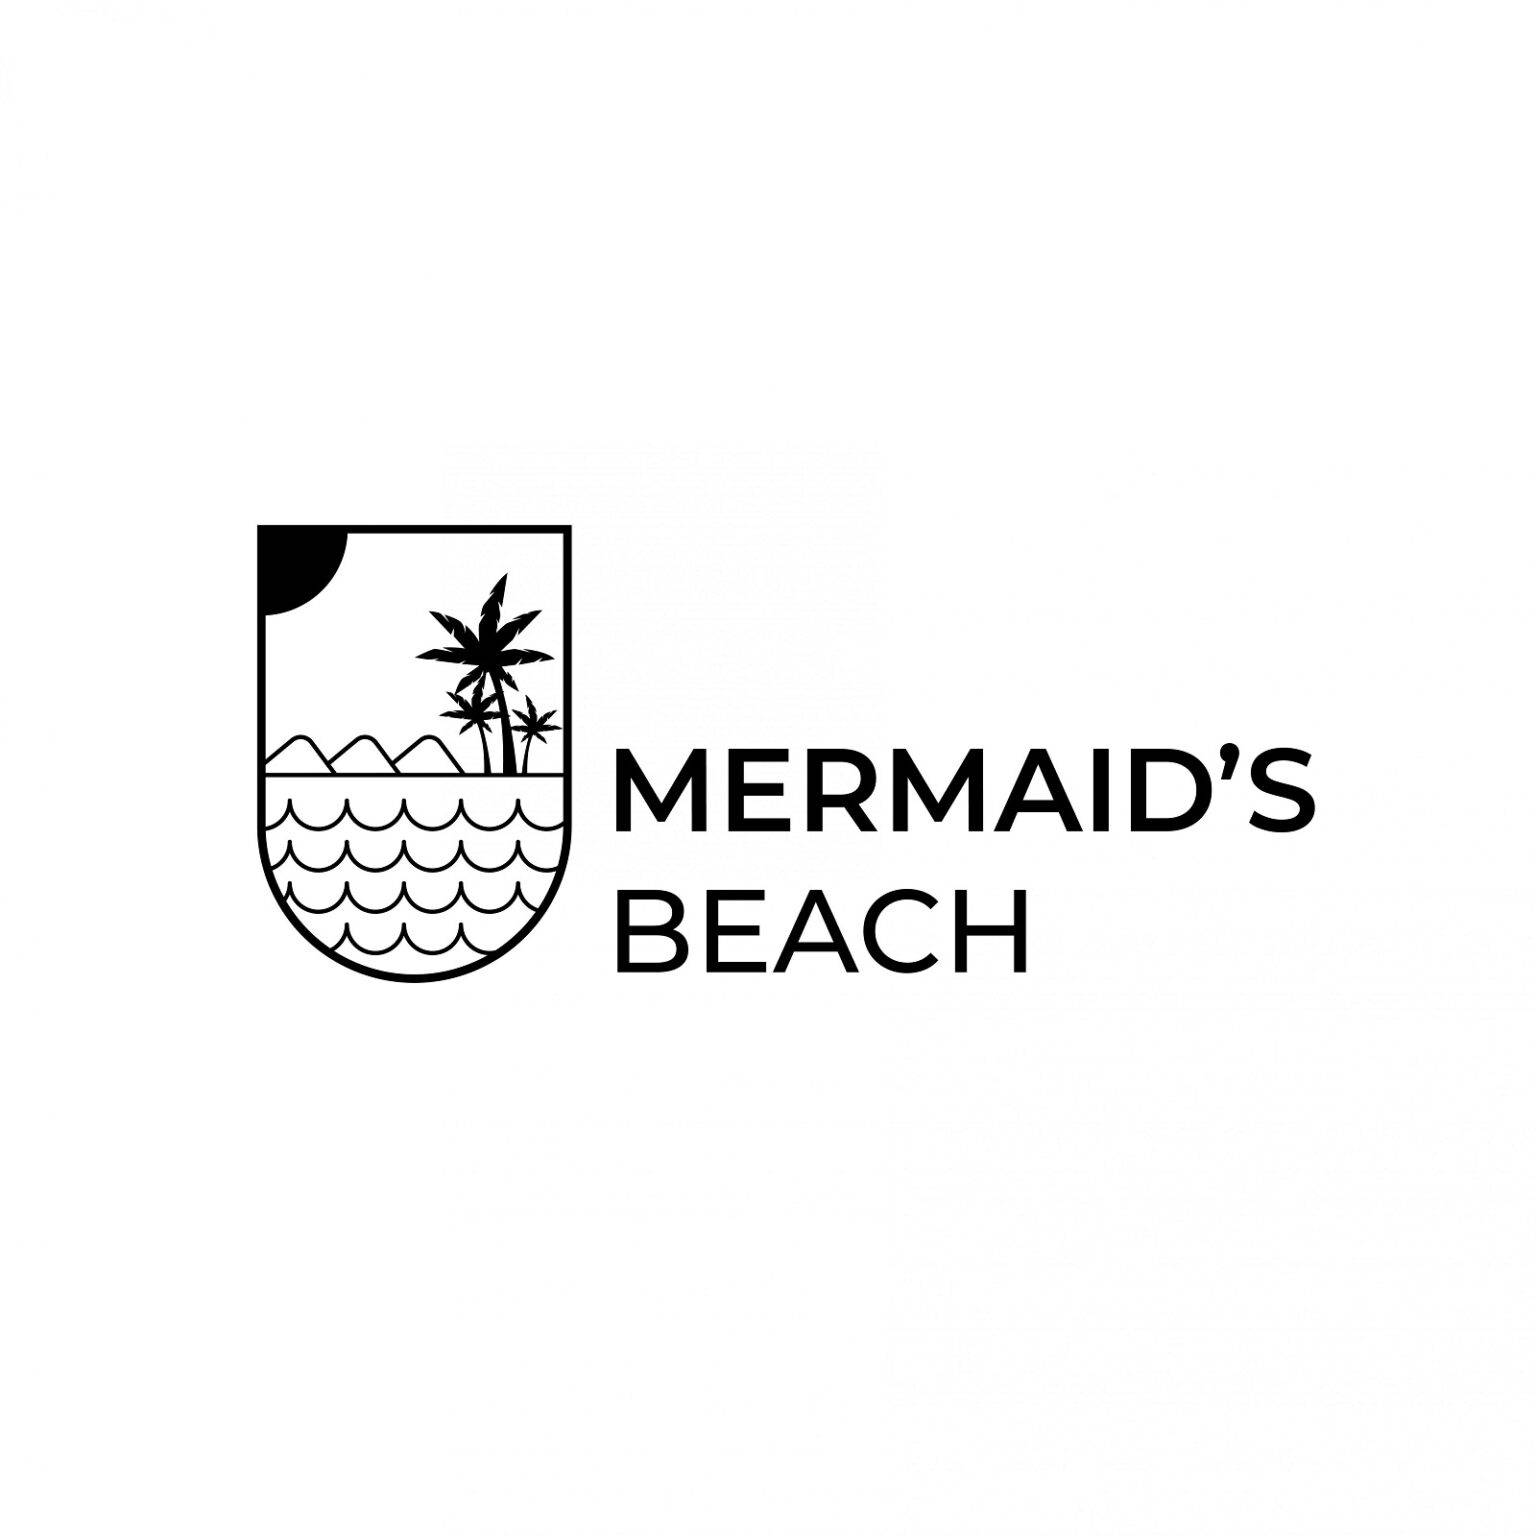 Mermaids beach logo design | Pikvector